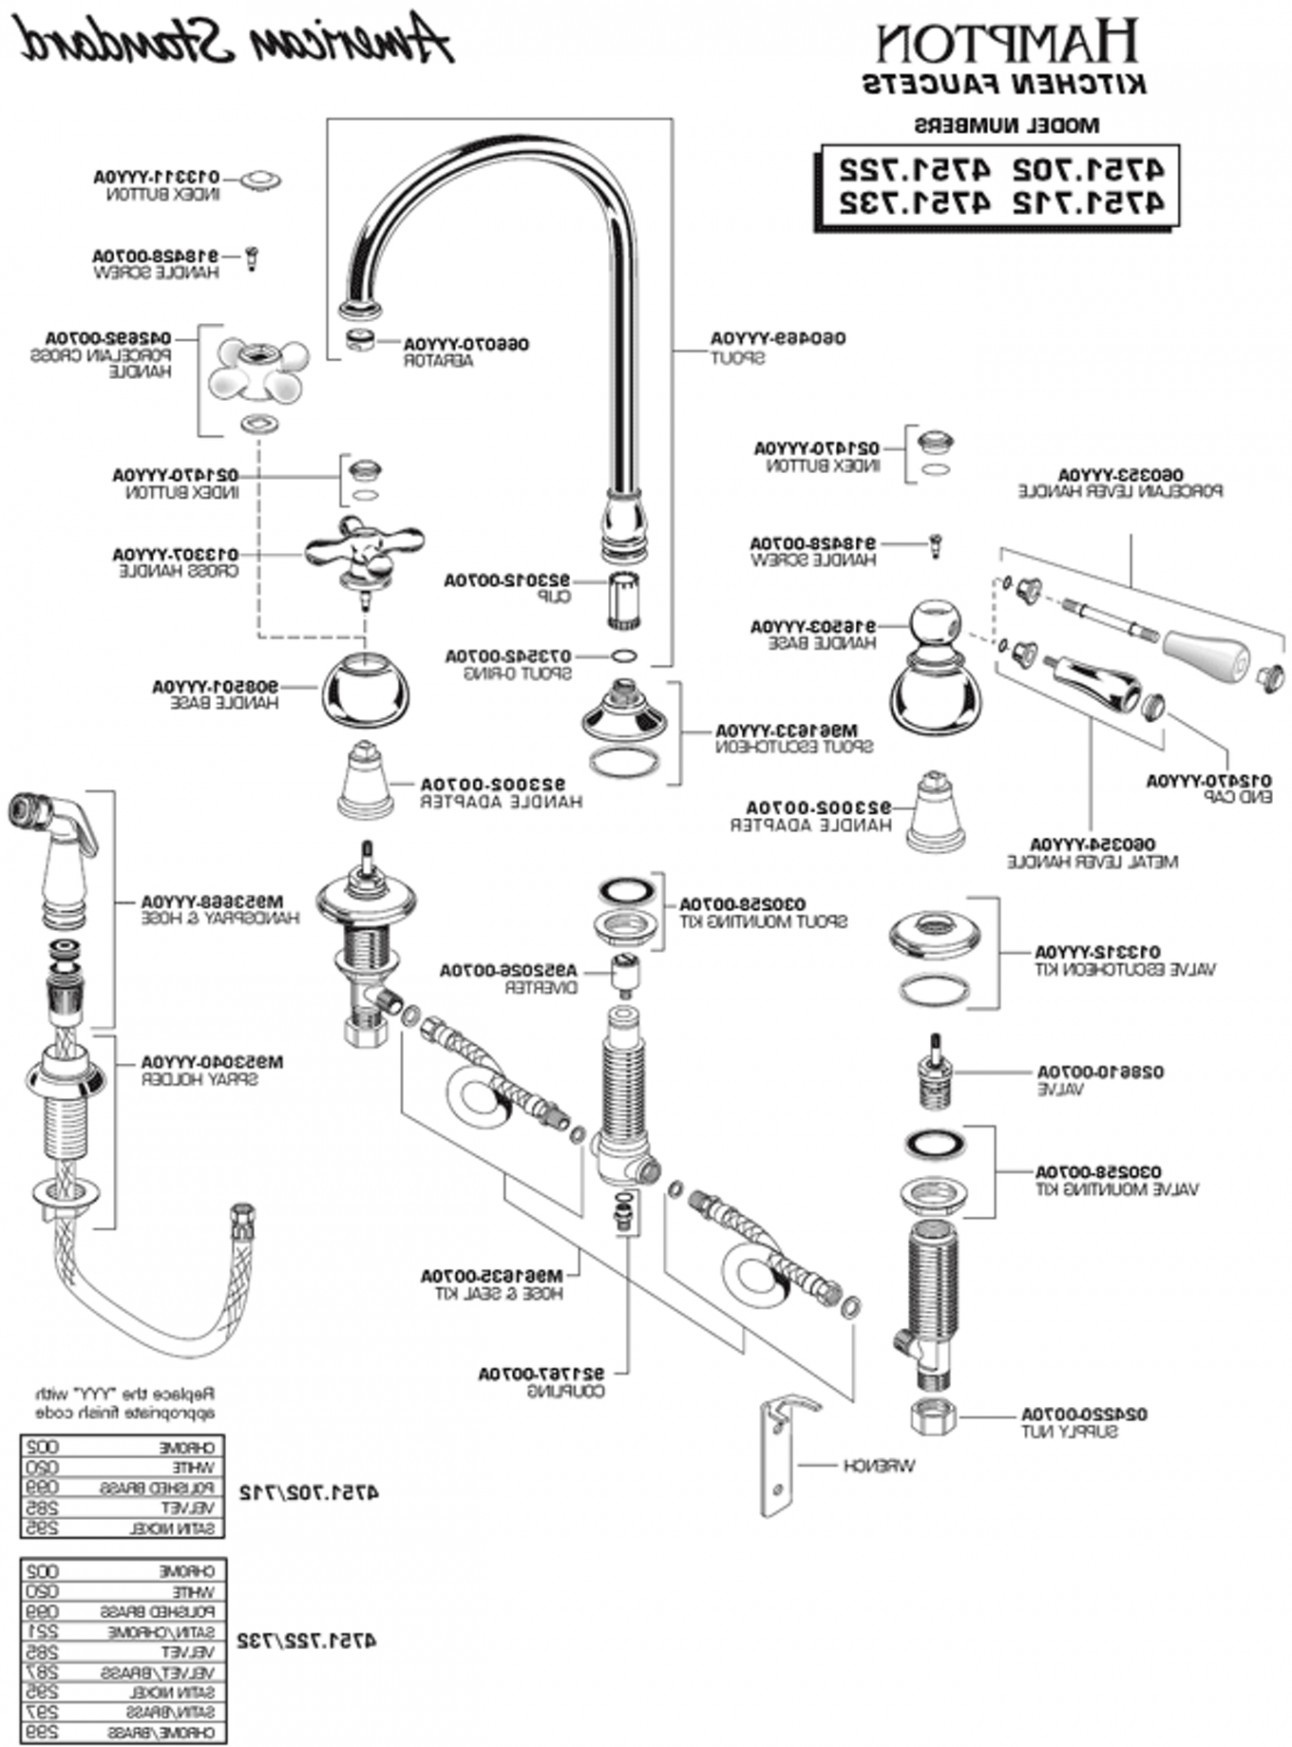 American Standard Faucet Parts Diagram Engaging Kitchen Faucet Parts Diagram within Faucet Old American Of American Standard Faucet Parts Diagram